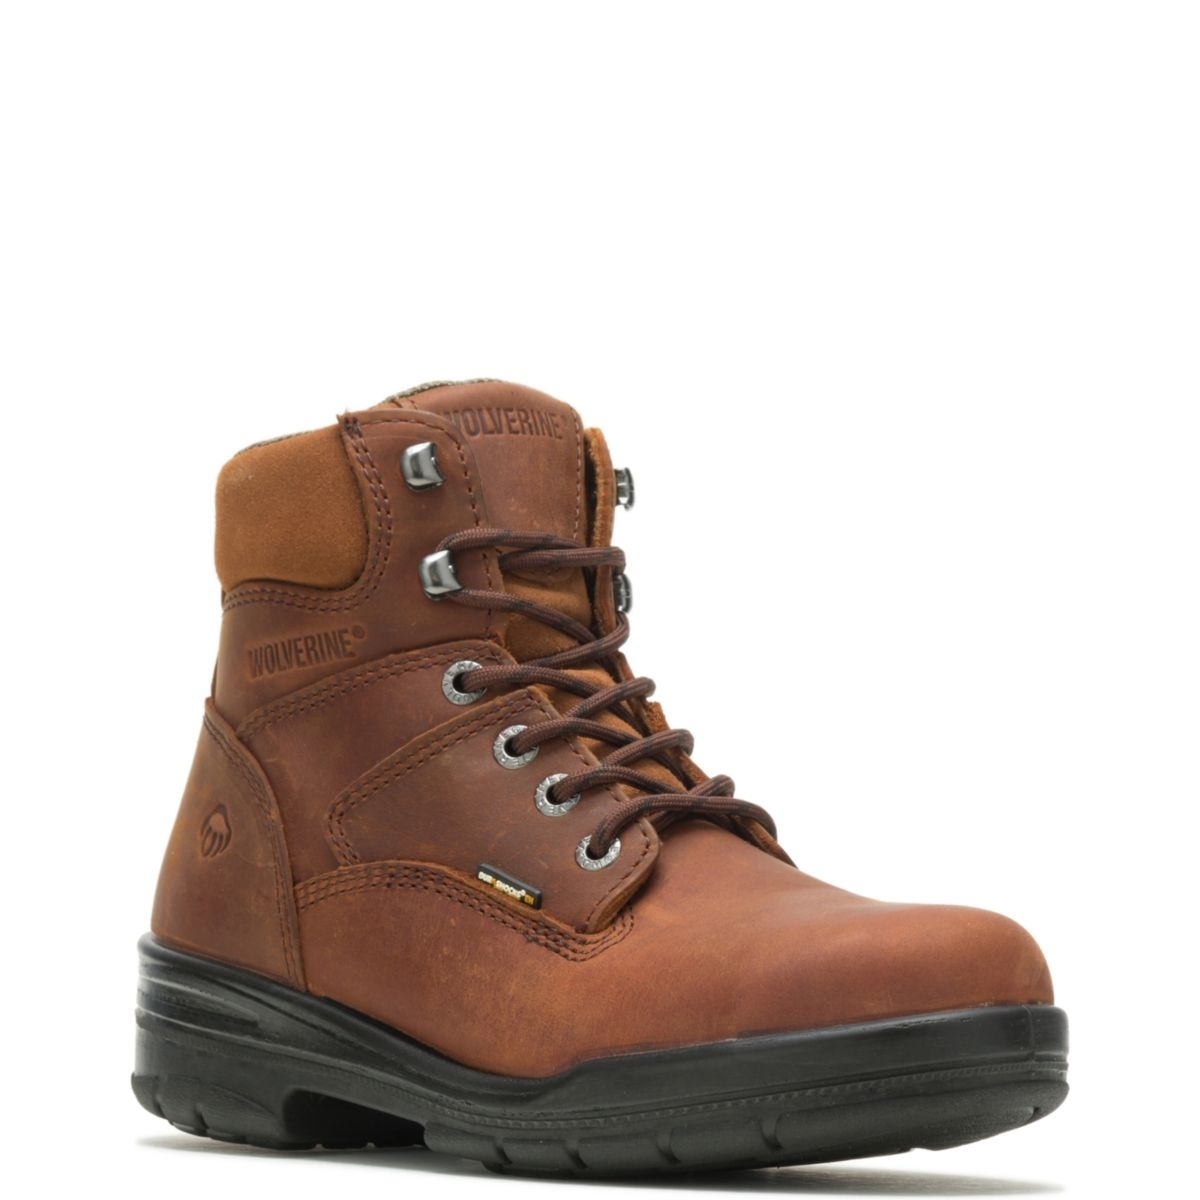 WOLVERINE Men's 6 DuraShocksÂ® Slip Resistant Steel Toe Work Boot Canyon - W02053 BRN/STL - BRN/STL, 11-M